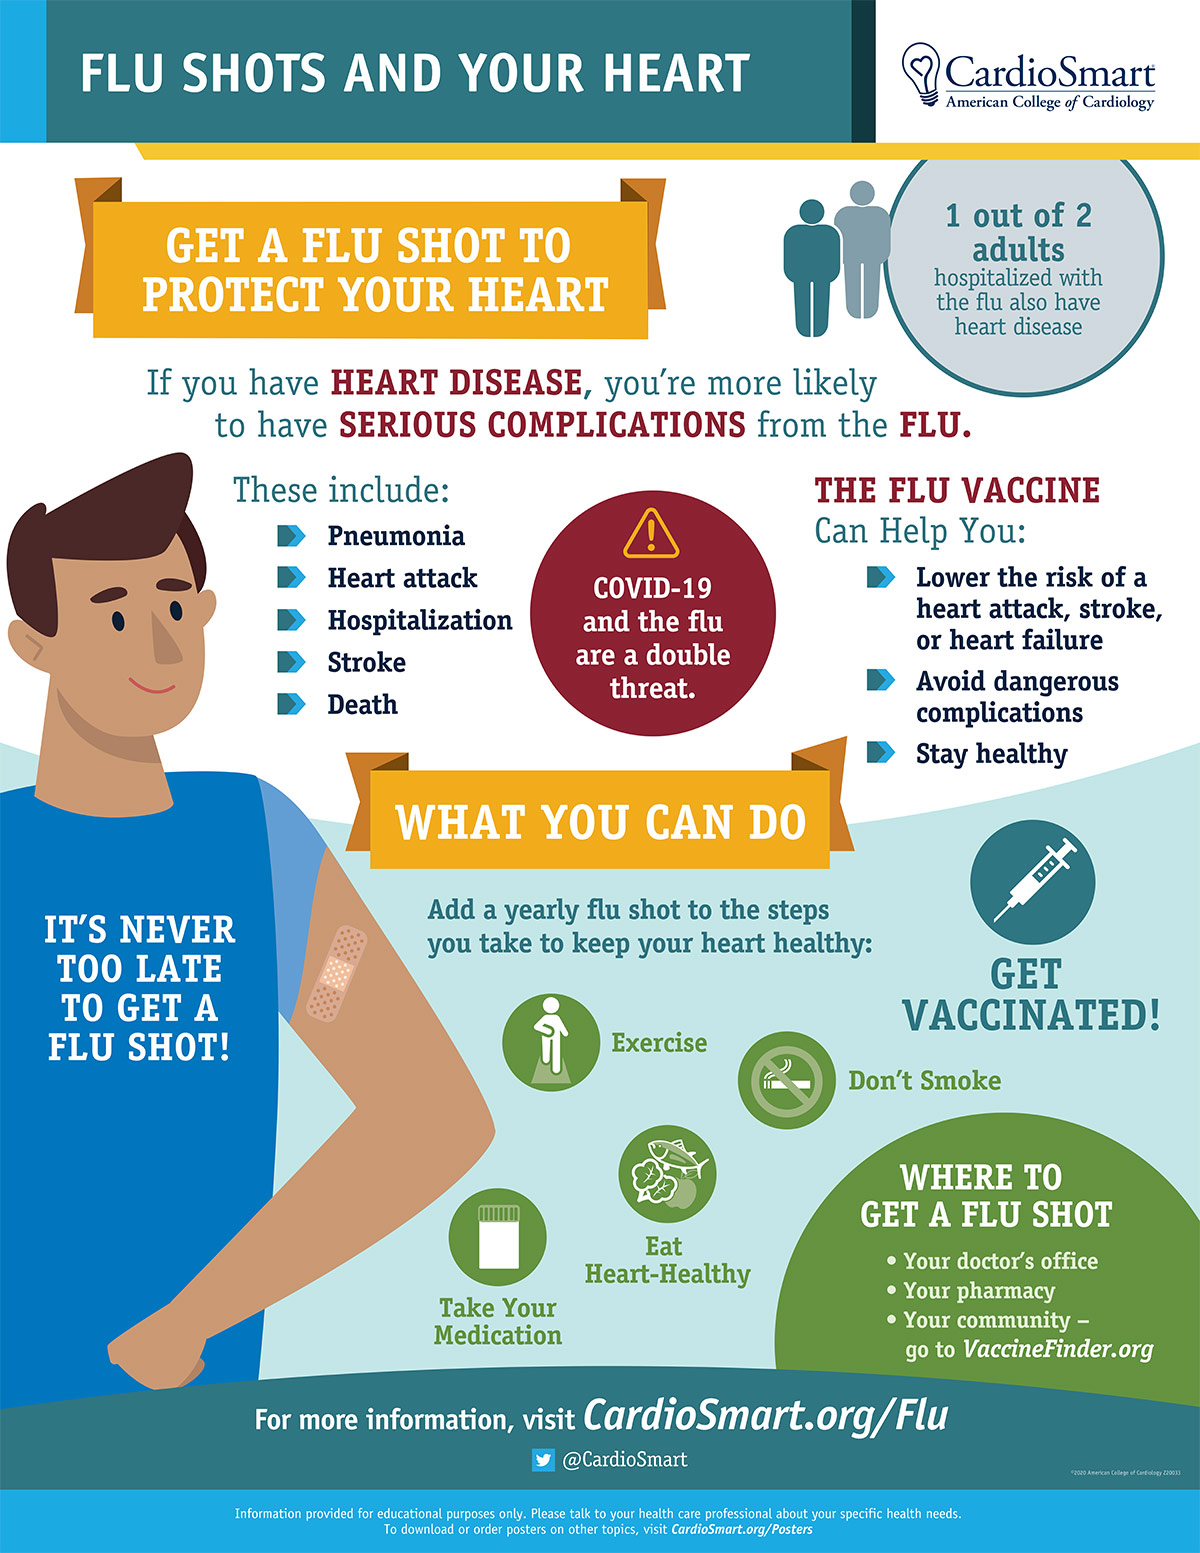 CardioSmart, Flu Shots and Your Heart